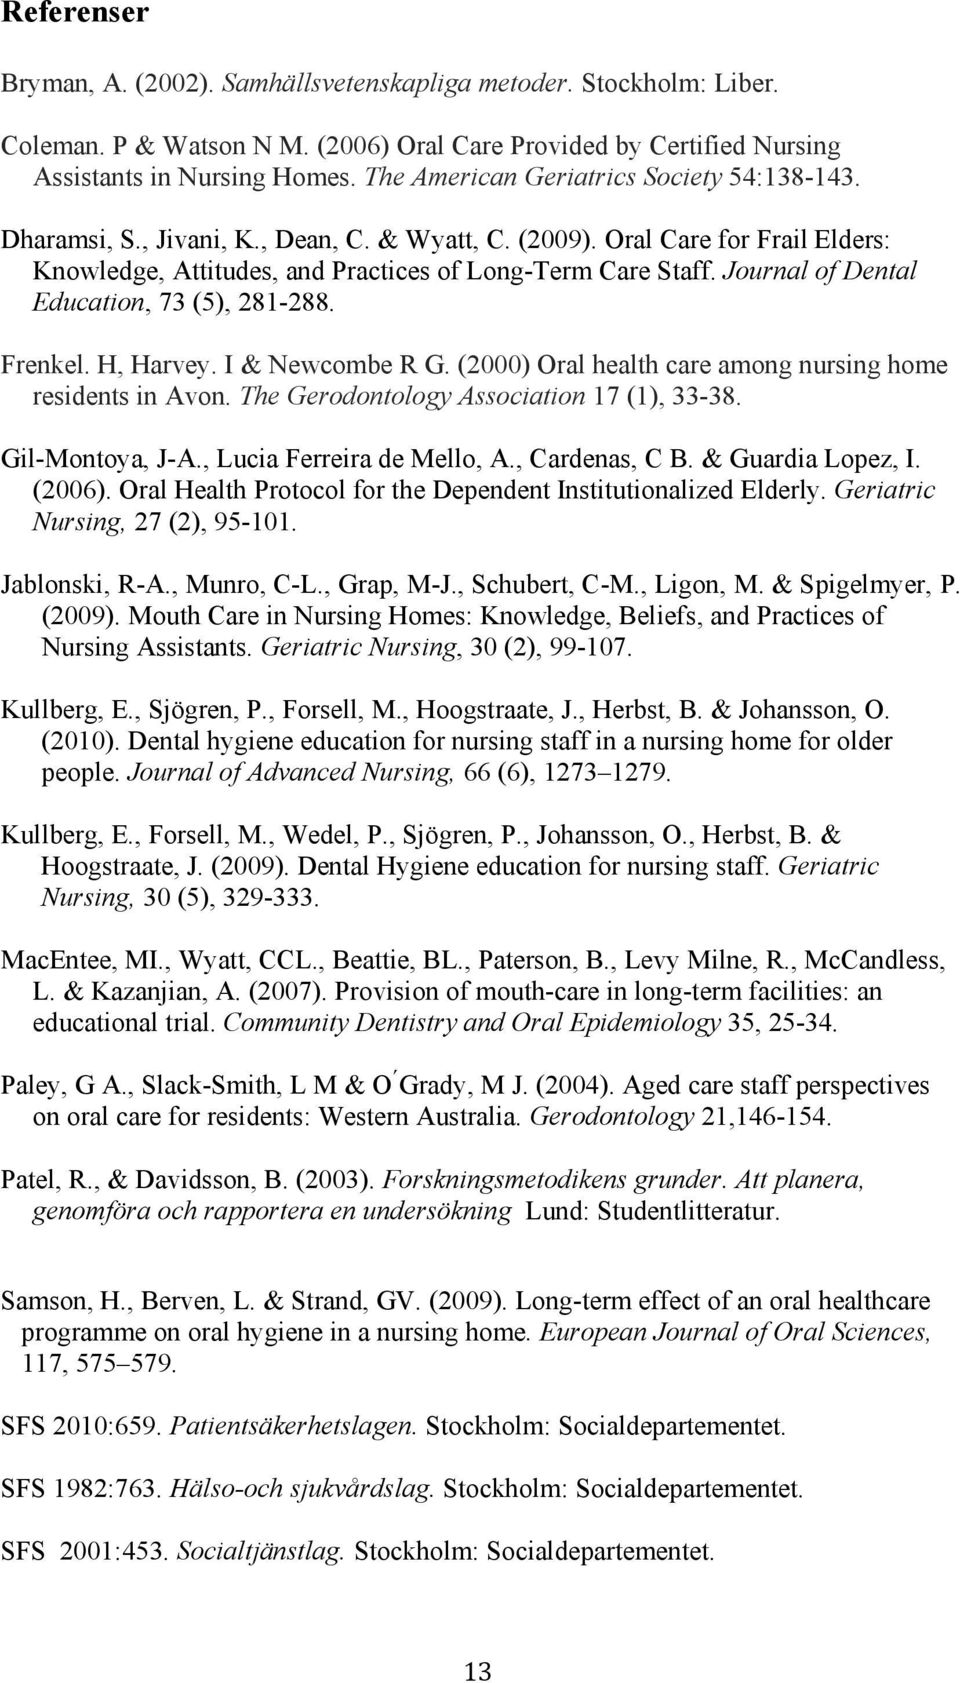 Journal of Dental Education, 73 (5), 281-288. Frenkel. H, Harvey. I & Newcombe R G. (2000) Oral health care among nursing home residents in Avon. The Gerodontology Association 17 (1), 33-38.